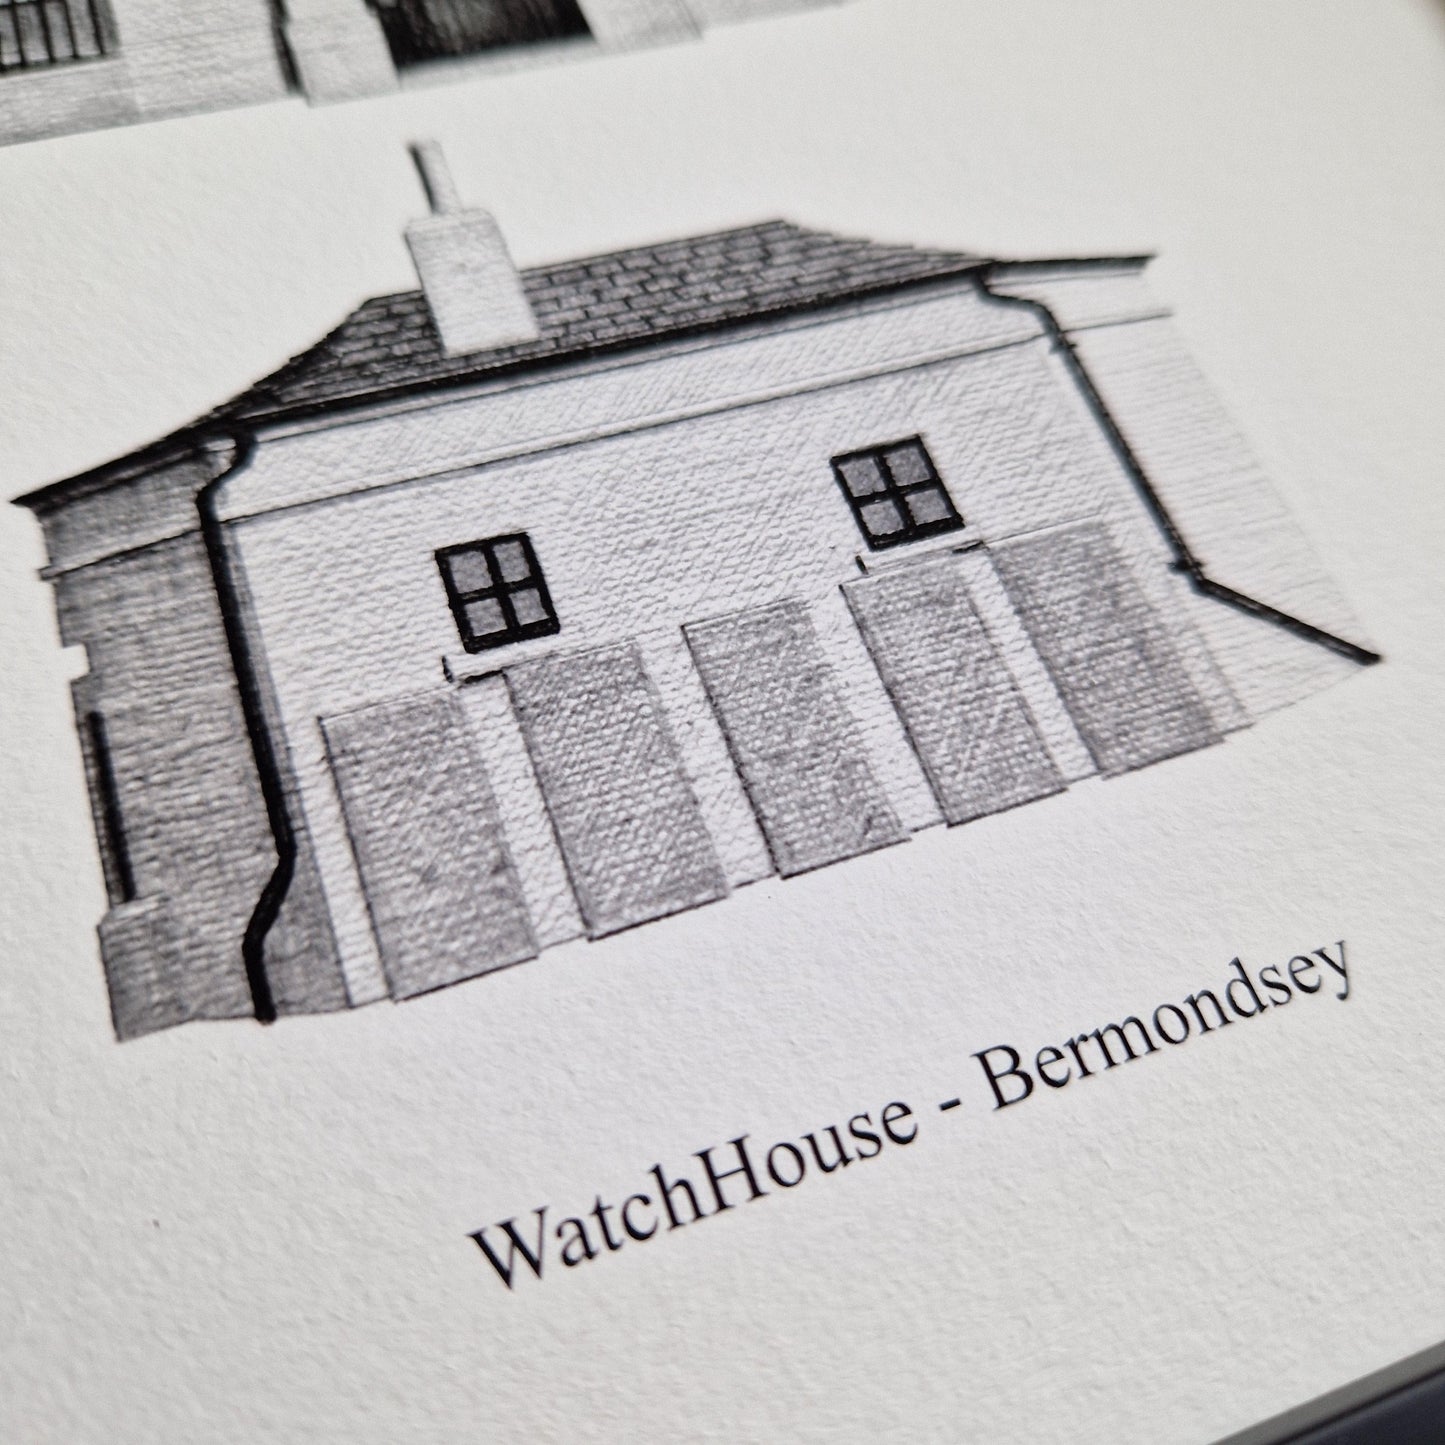 WatchHouse - Bermondsey